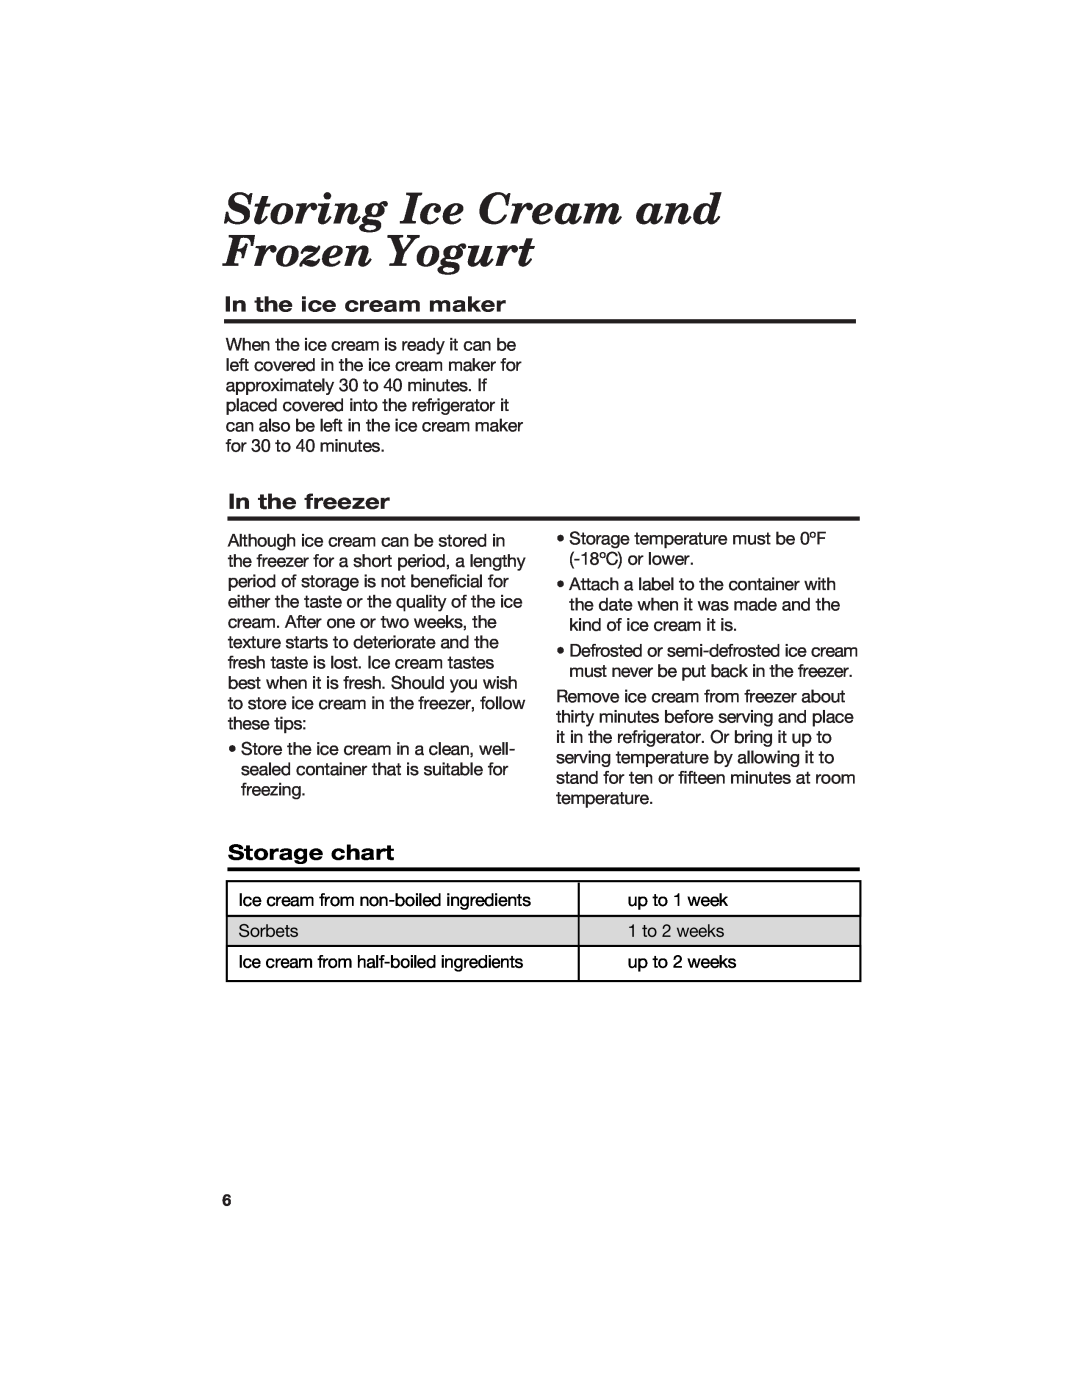 Hamilton Beach Ice Cream and Frozen Yogurt Maker manual Storing Ice Cream and Frozen Yogurt, In the ice cream maker 